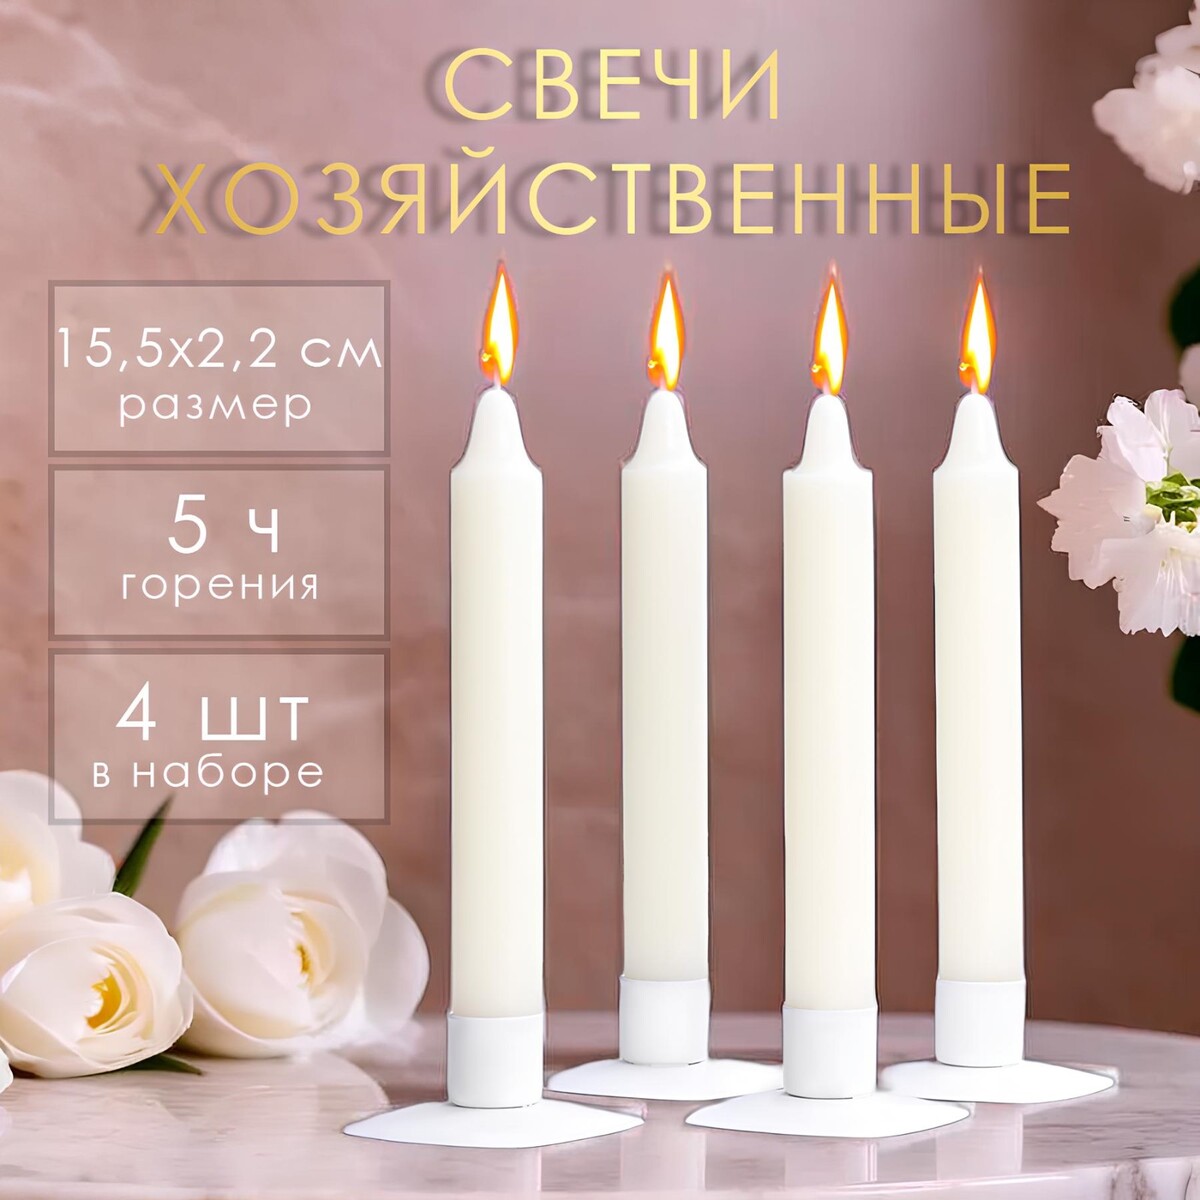 Набор свечей хозяйственных, 2,2х15,5 см, 5 ч, 4 штуки No brand